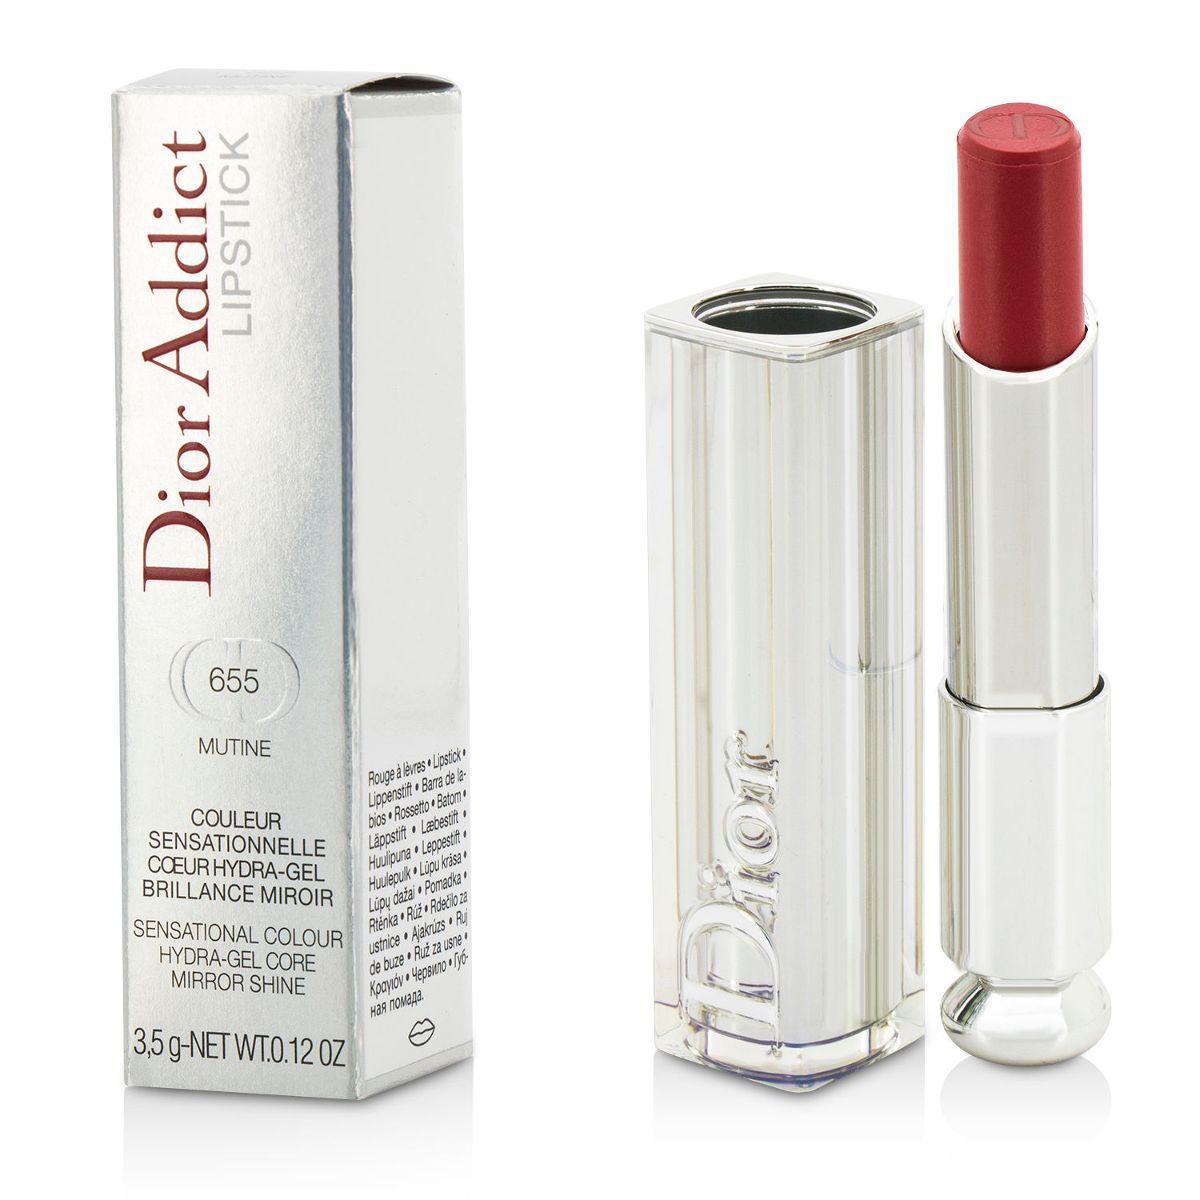 Dior Addict Hydra Gel Core Mirror Shine Lipstick - #655 Mutine Christian Dior Image